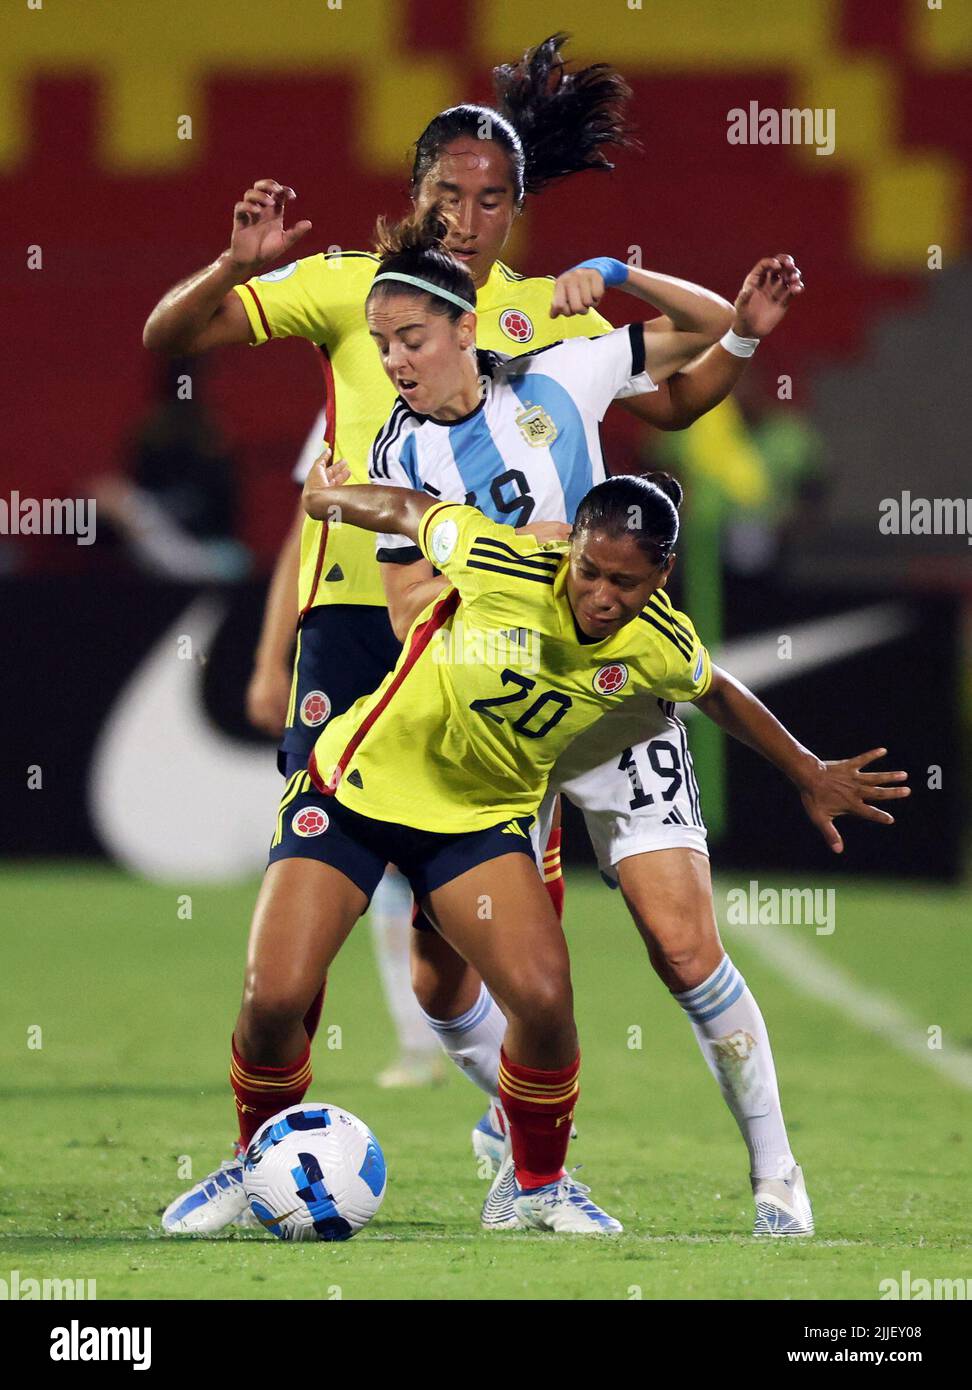 Monica gonzalez soccer fotografías e imágenes de alta resolución - Alamy